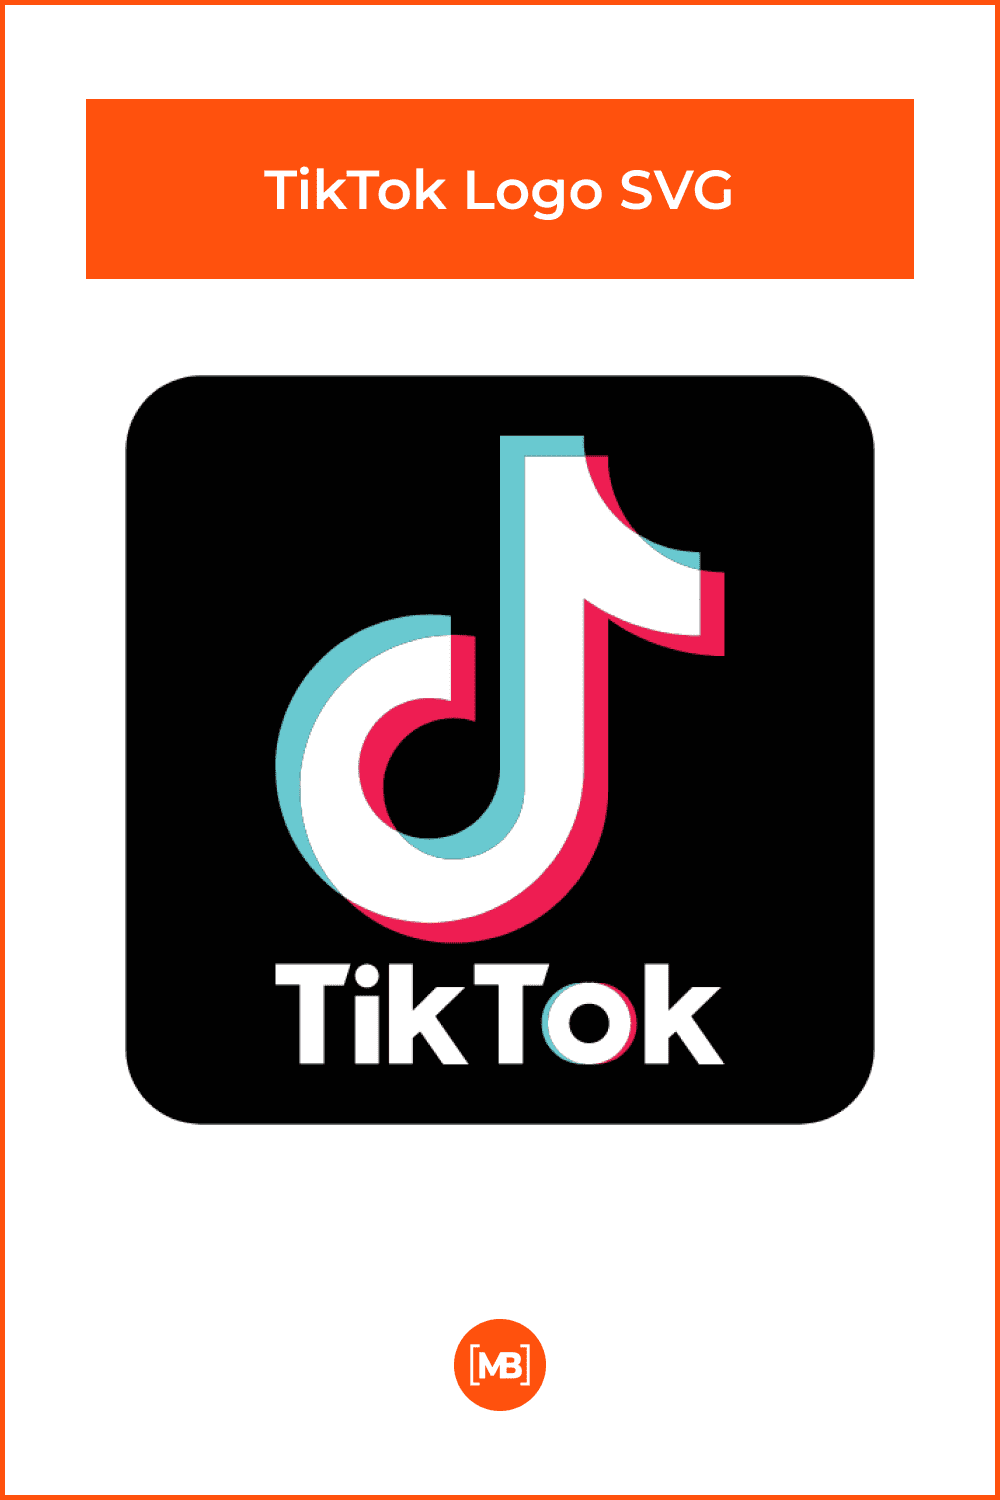 TikTok Logo SVG.